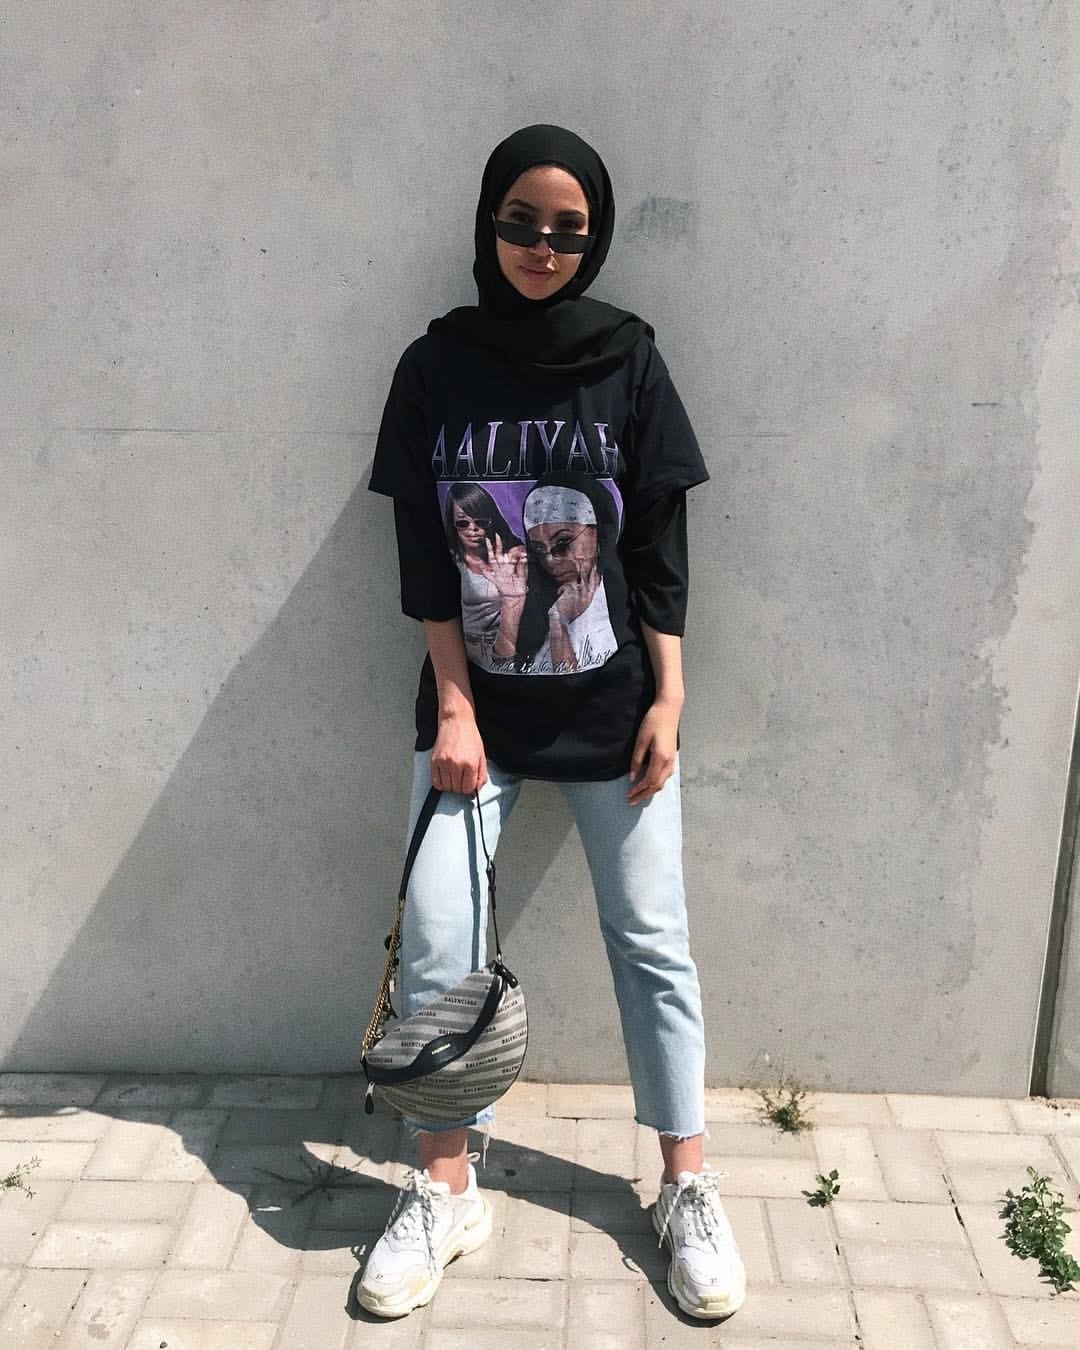 Hijab Outfits for Teenage Girls - 20 Cool Hijab Style Looks